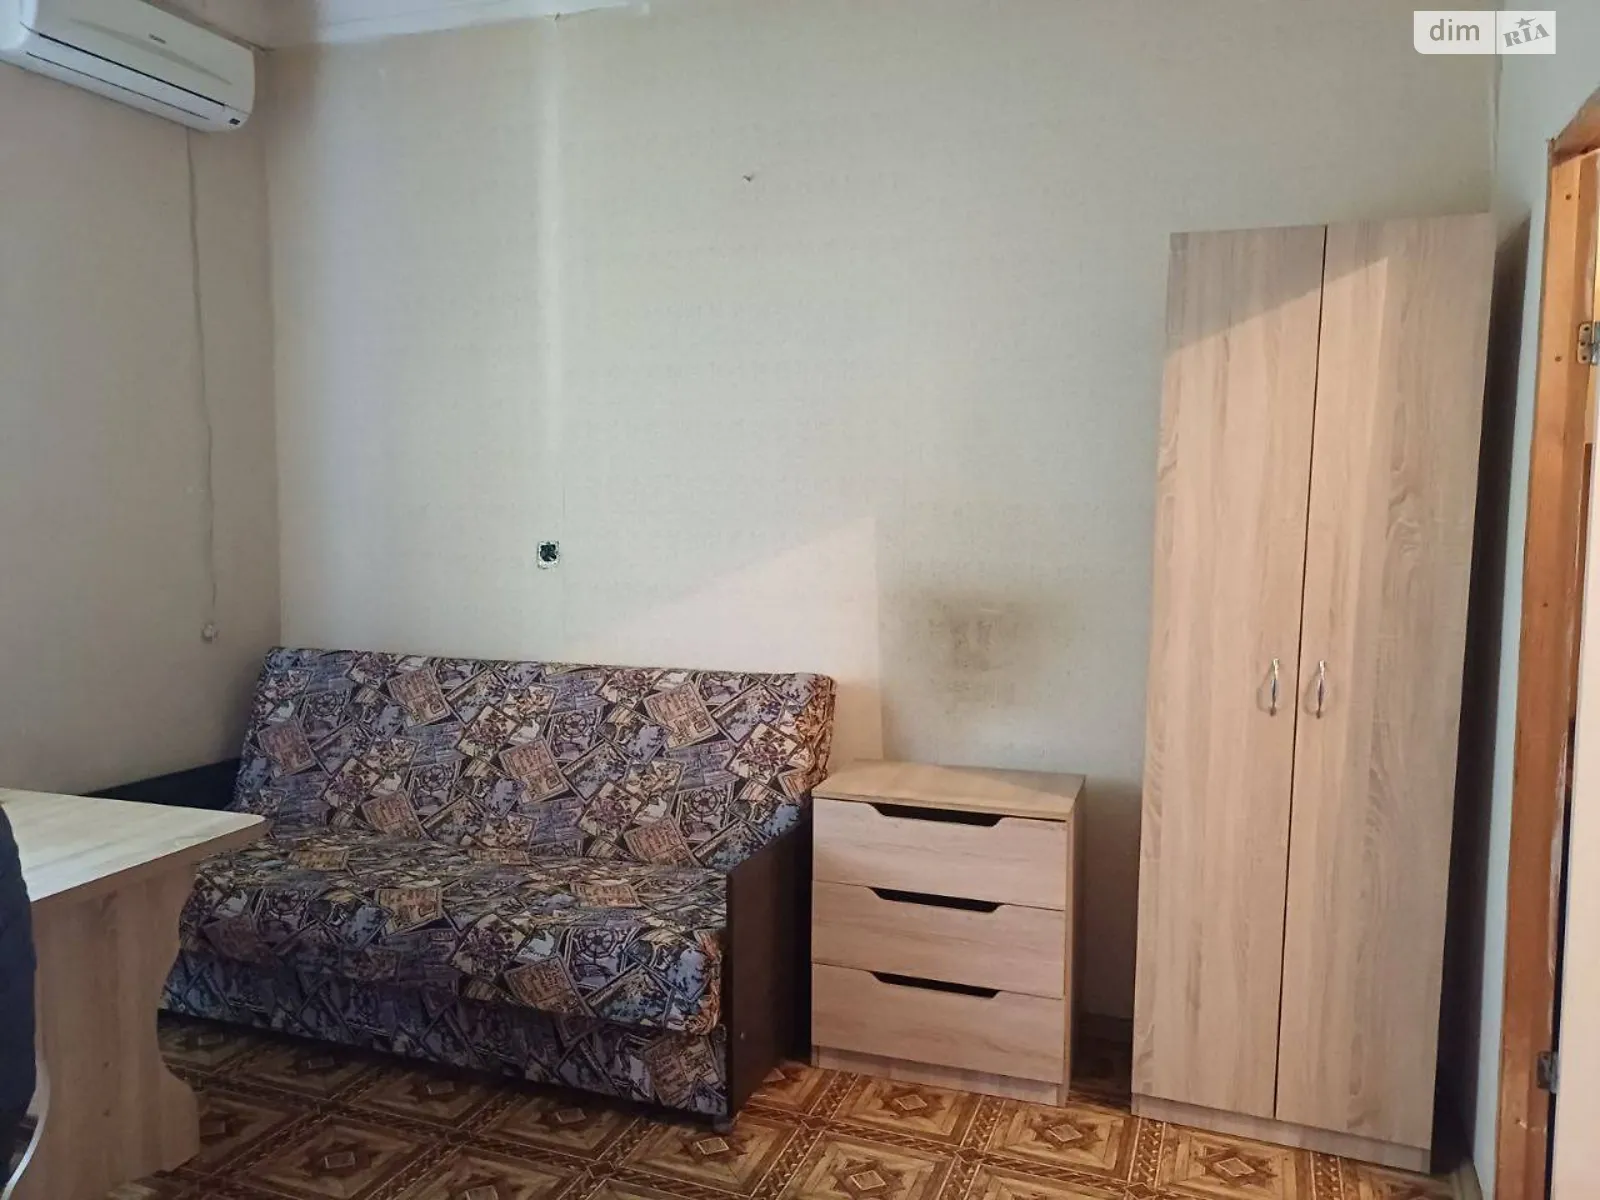 Продается комната 30 кв. м в Одессе, цена: 10500 $ - фото 1